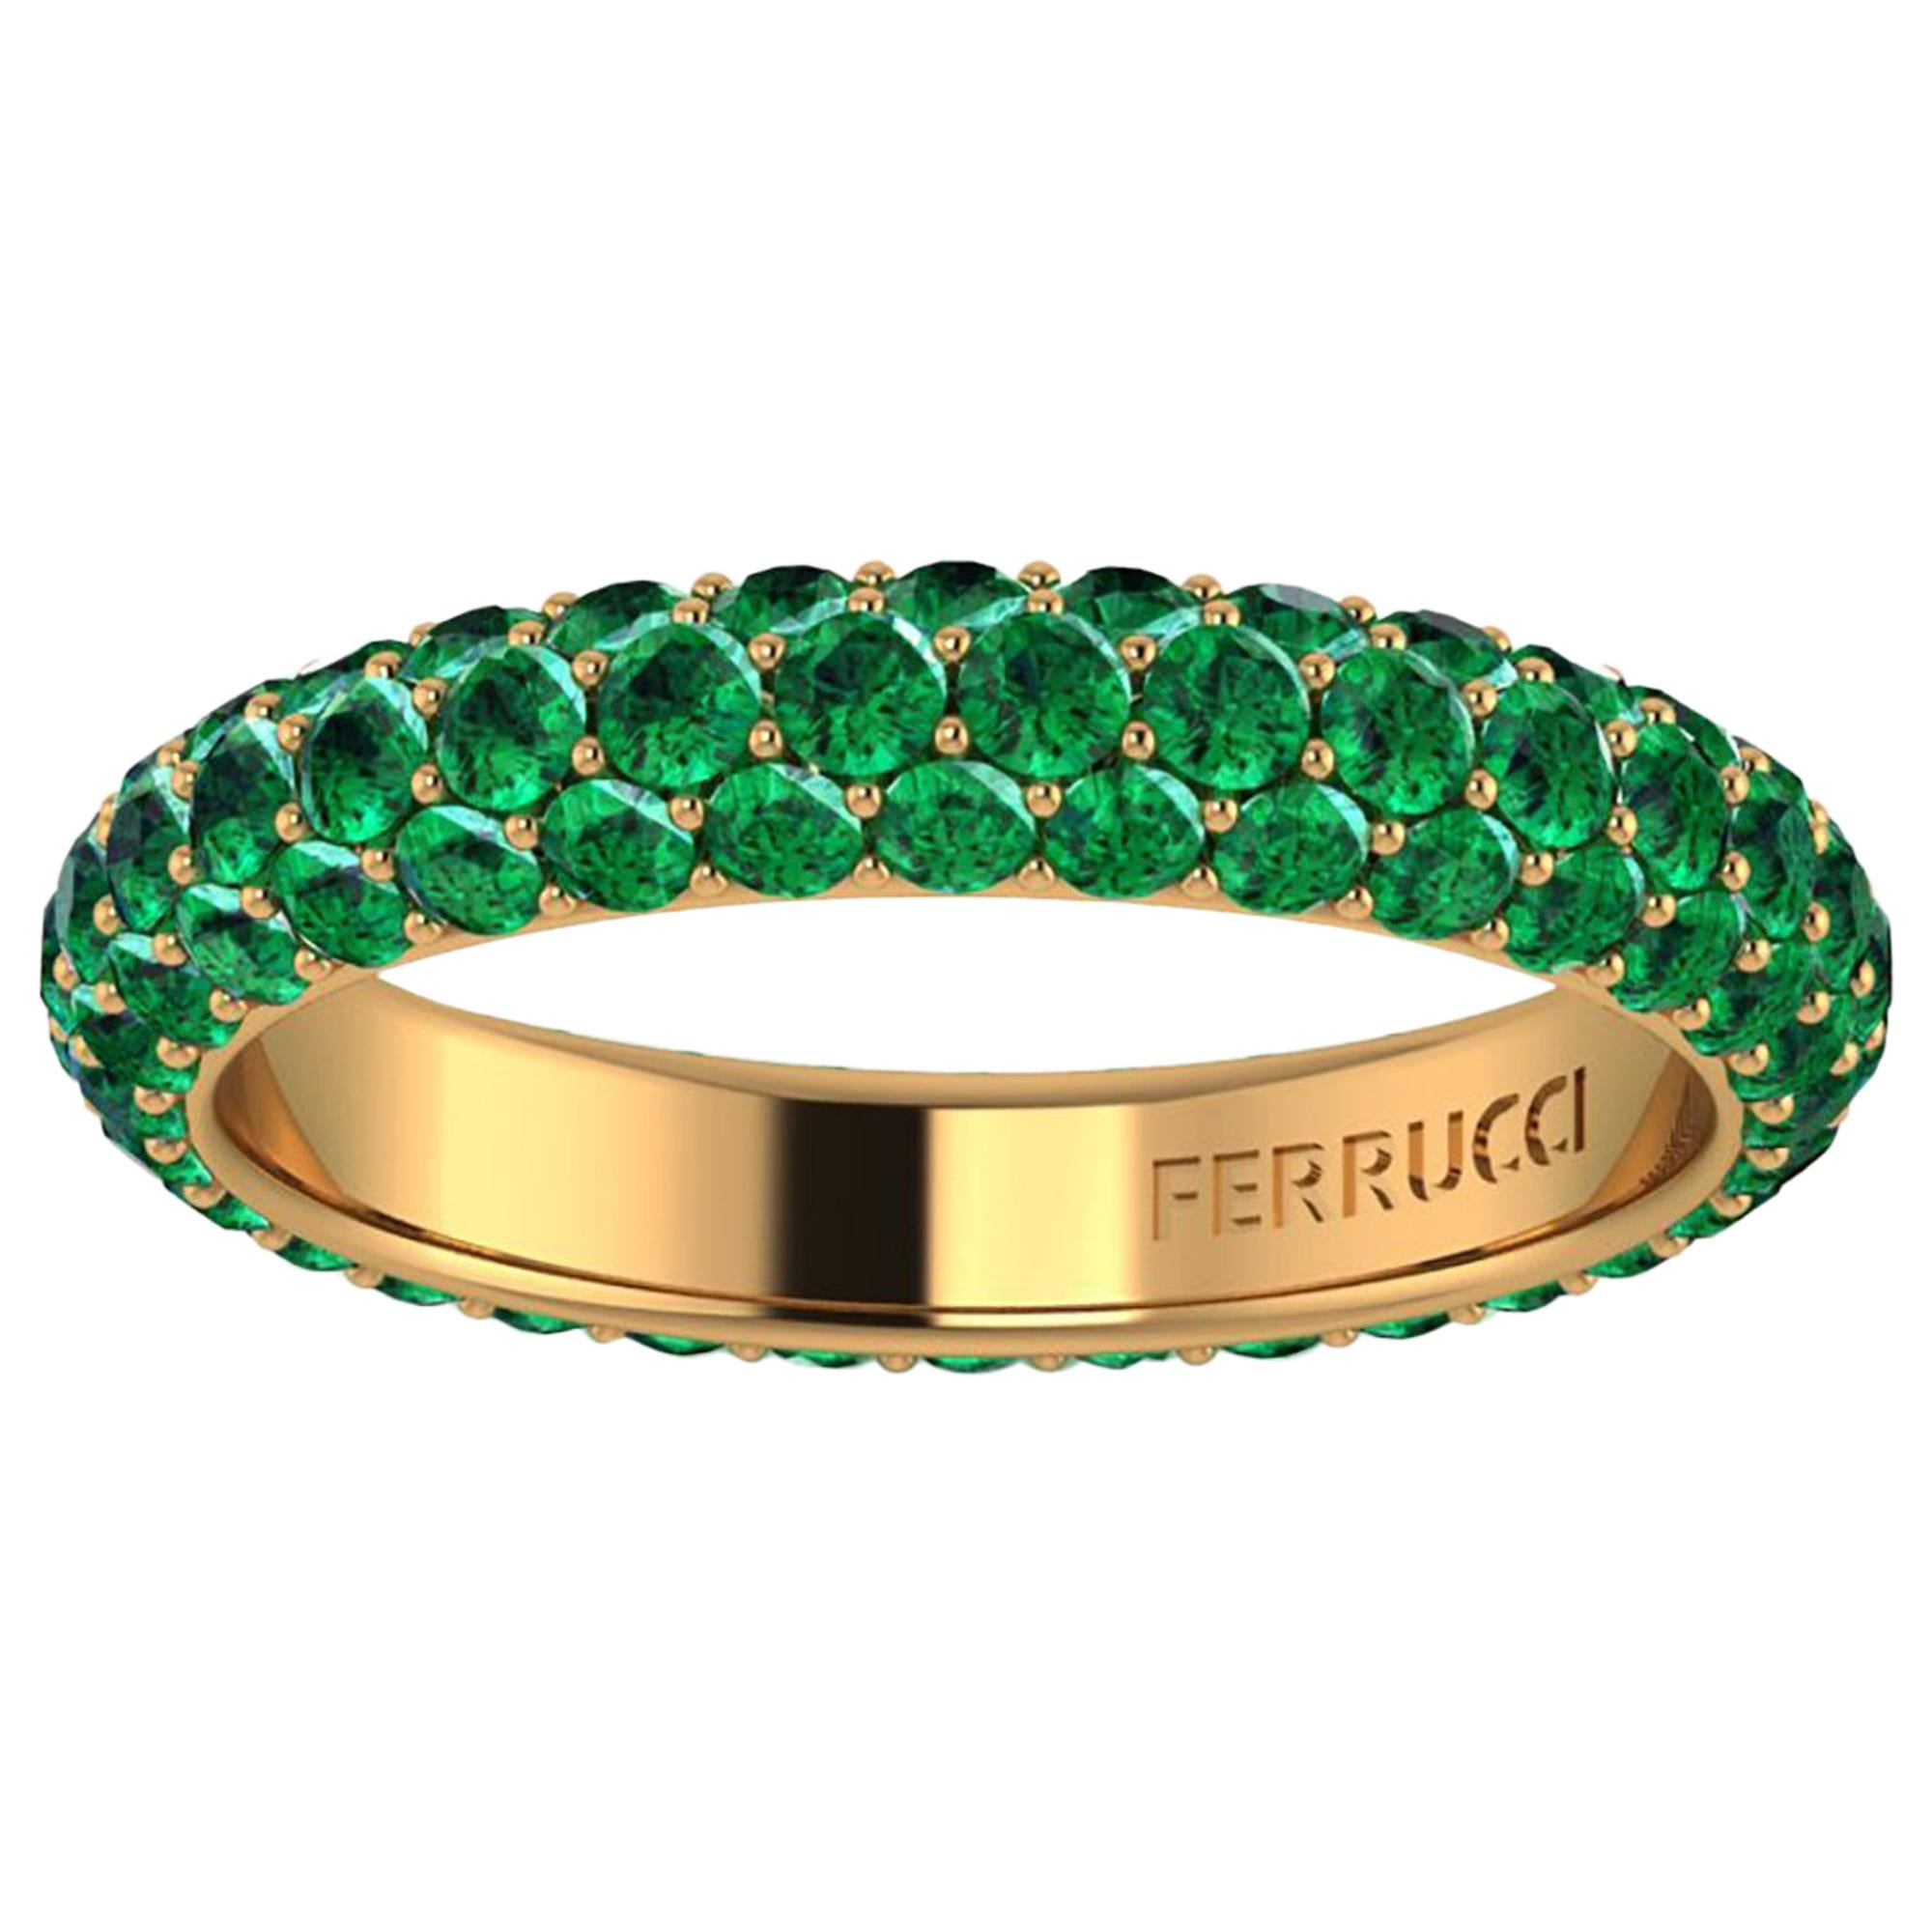 2.00 Carat Emeralds Pave' Eternity Ring in 18 Karat Yellow Gold